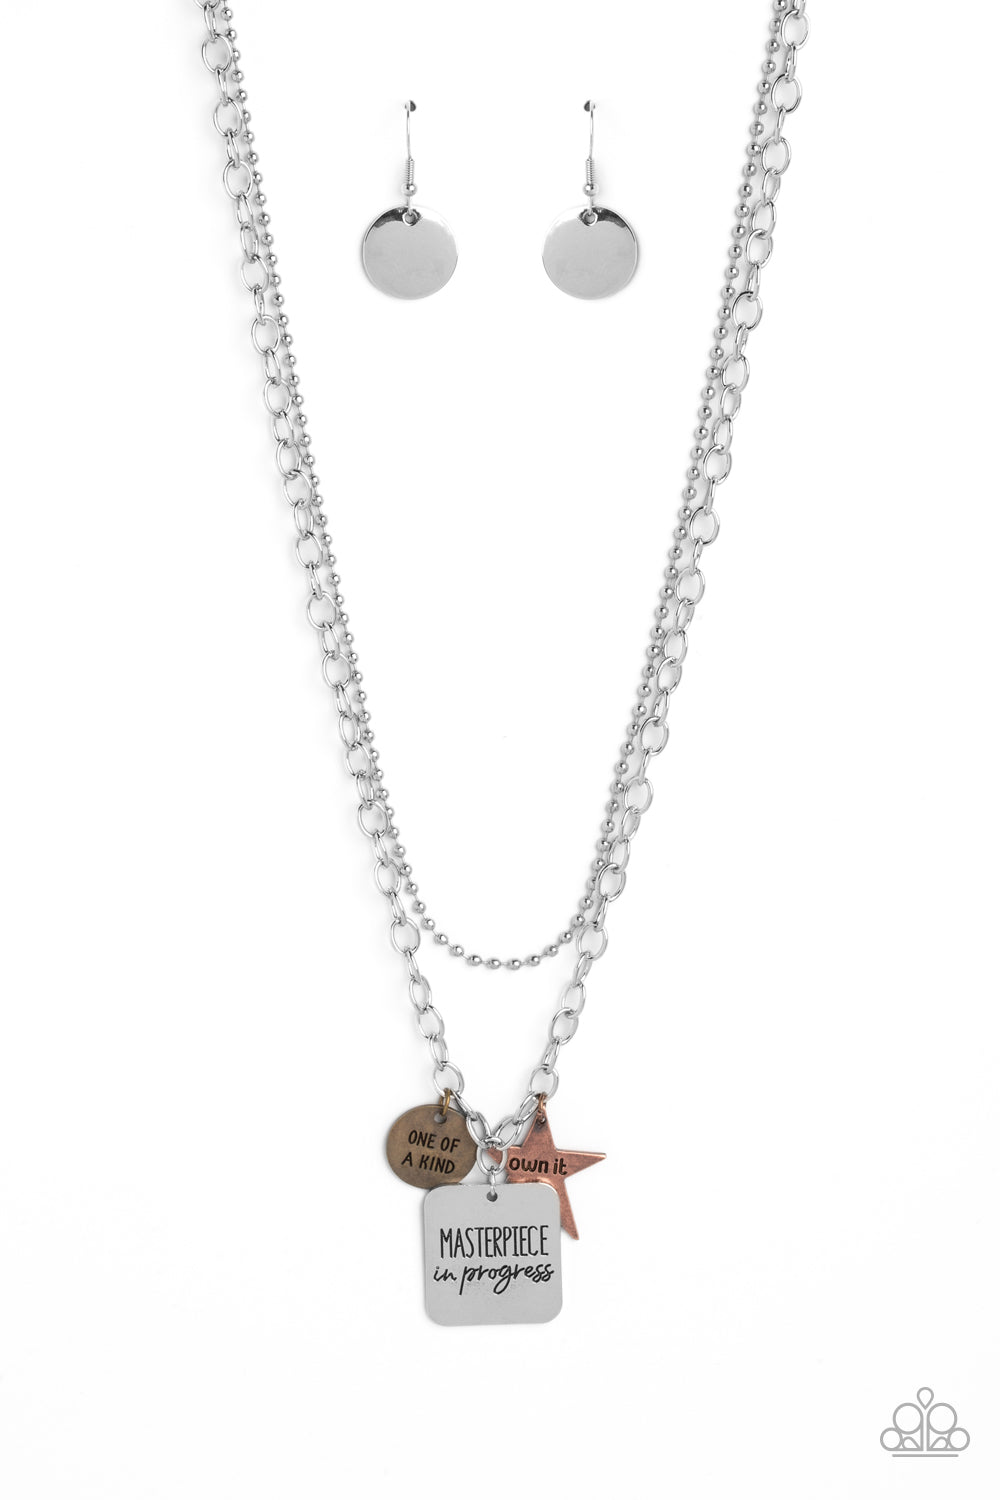 Jump Street Men's Copper Wheat Chain Necklace - Paparazzi Accessories